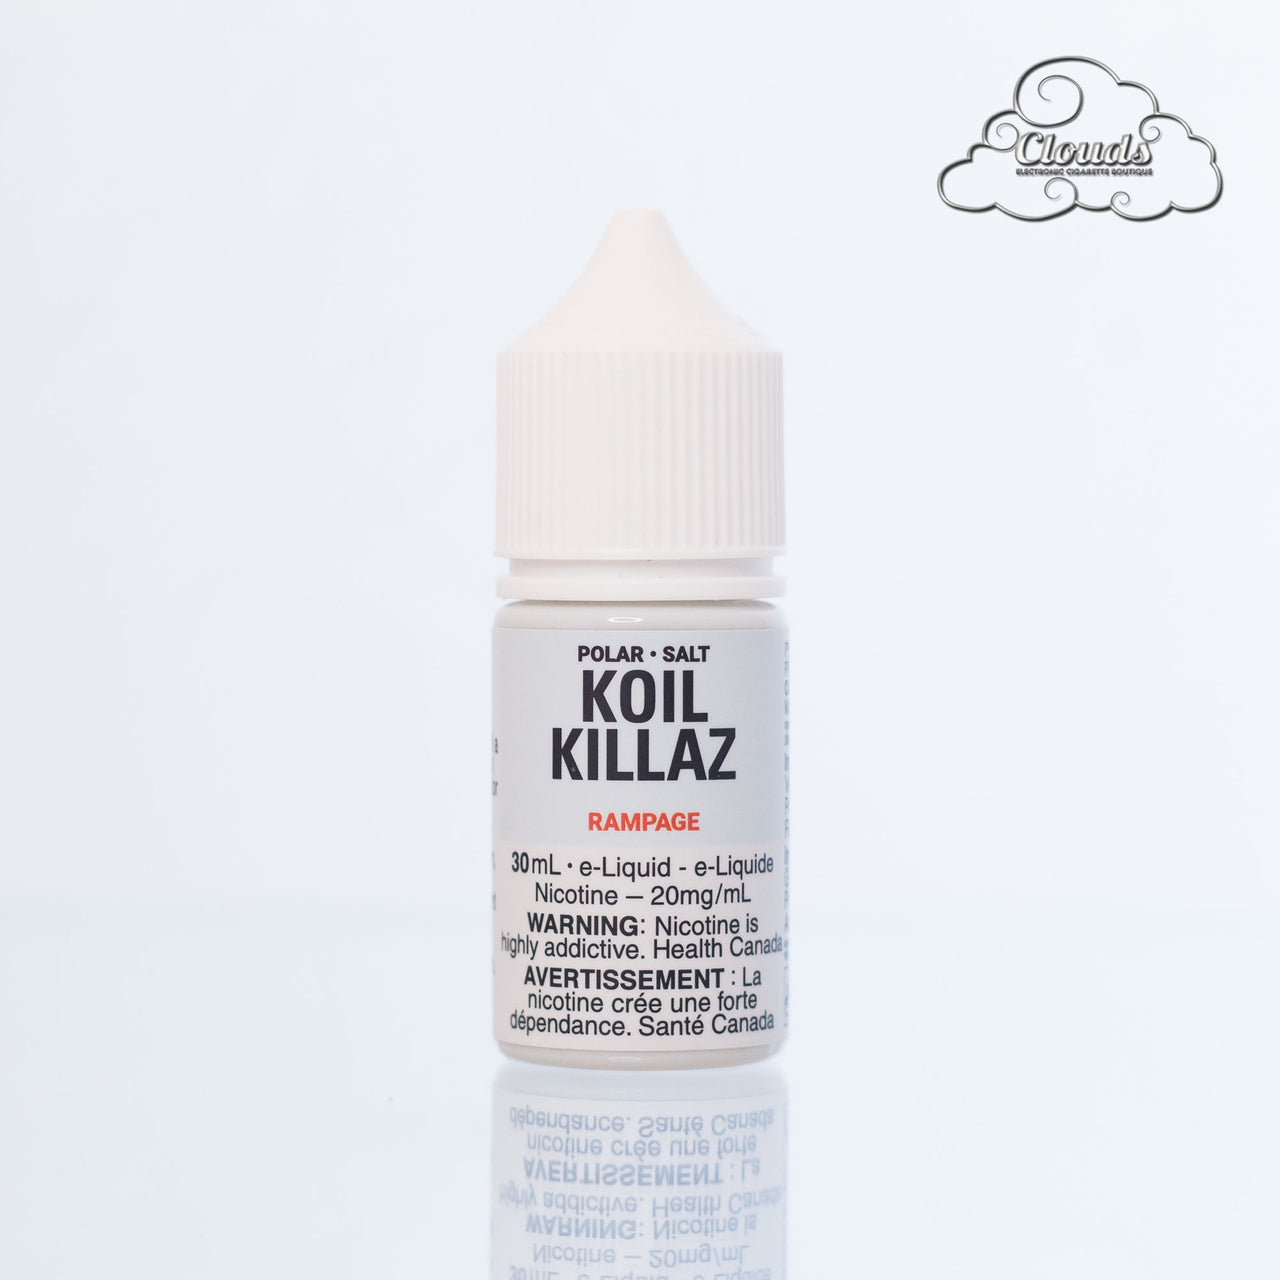 Koil Killaz Rampage Polar Salt